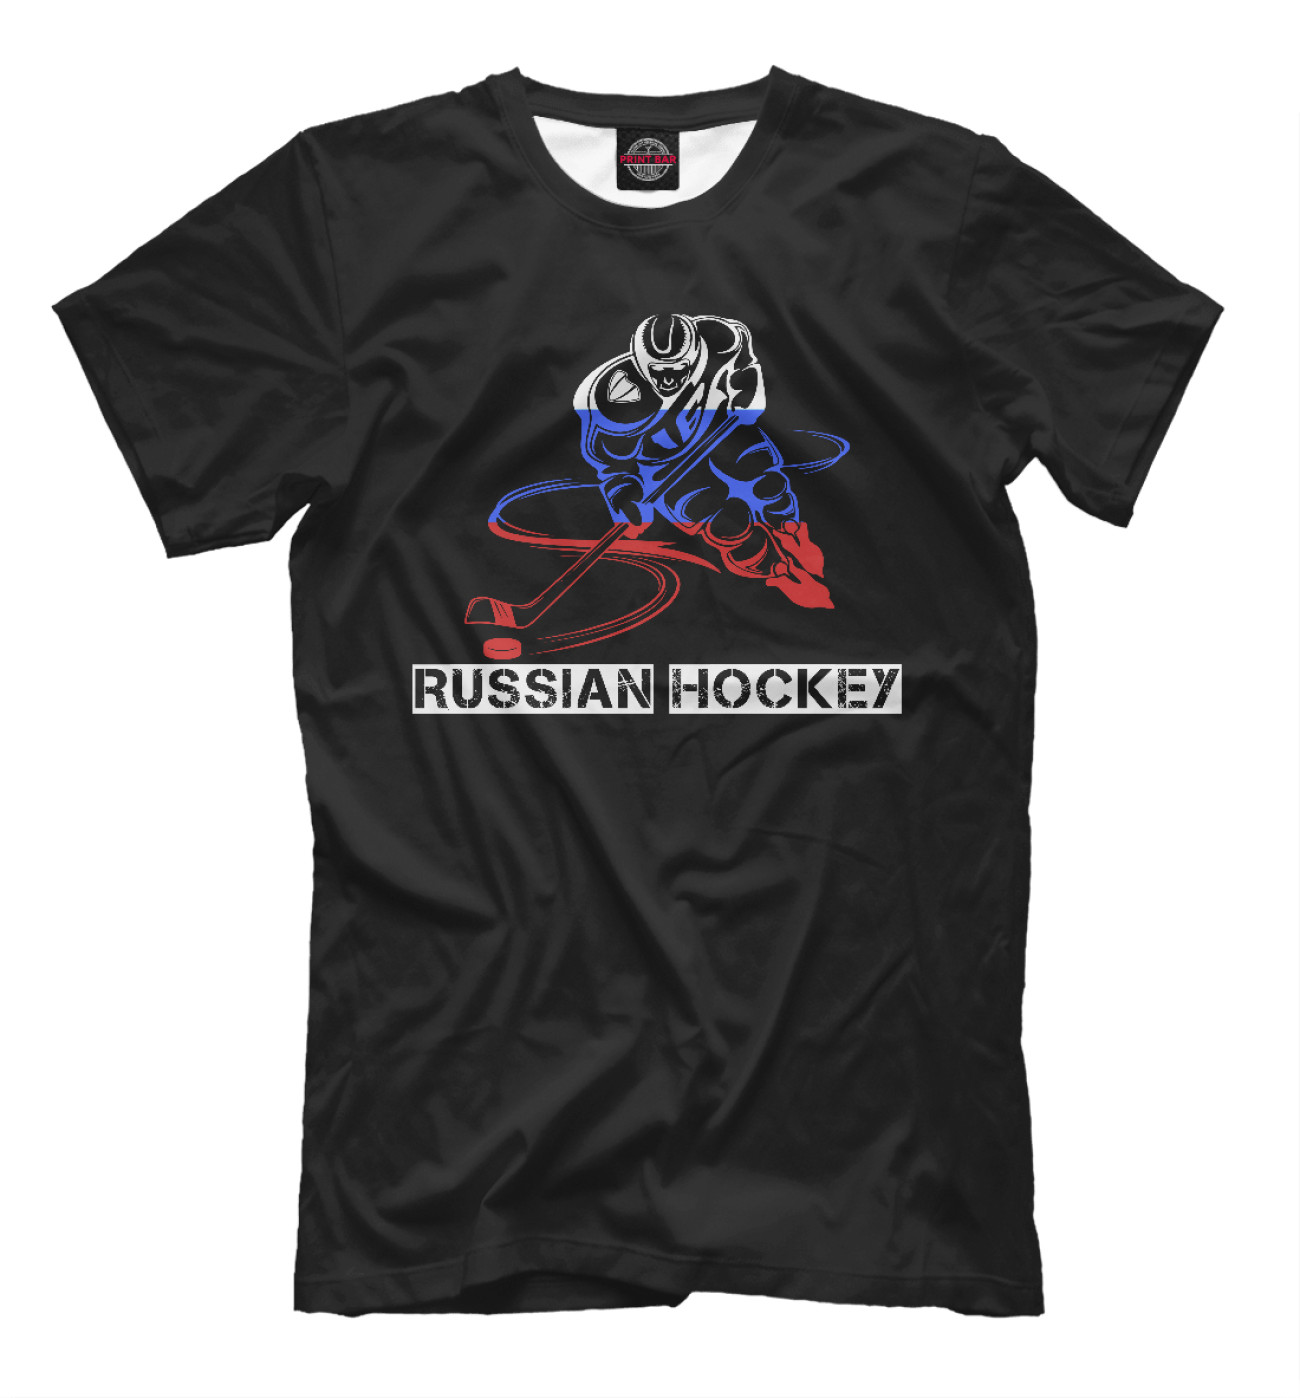 Мужская Футболка Russian Hockey, артикул: CMR-160488-fut-2